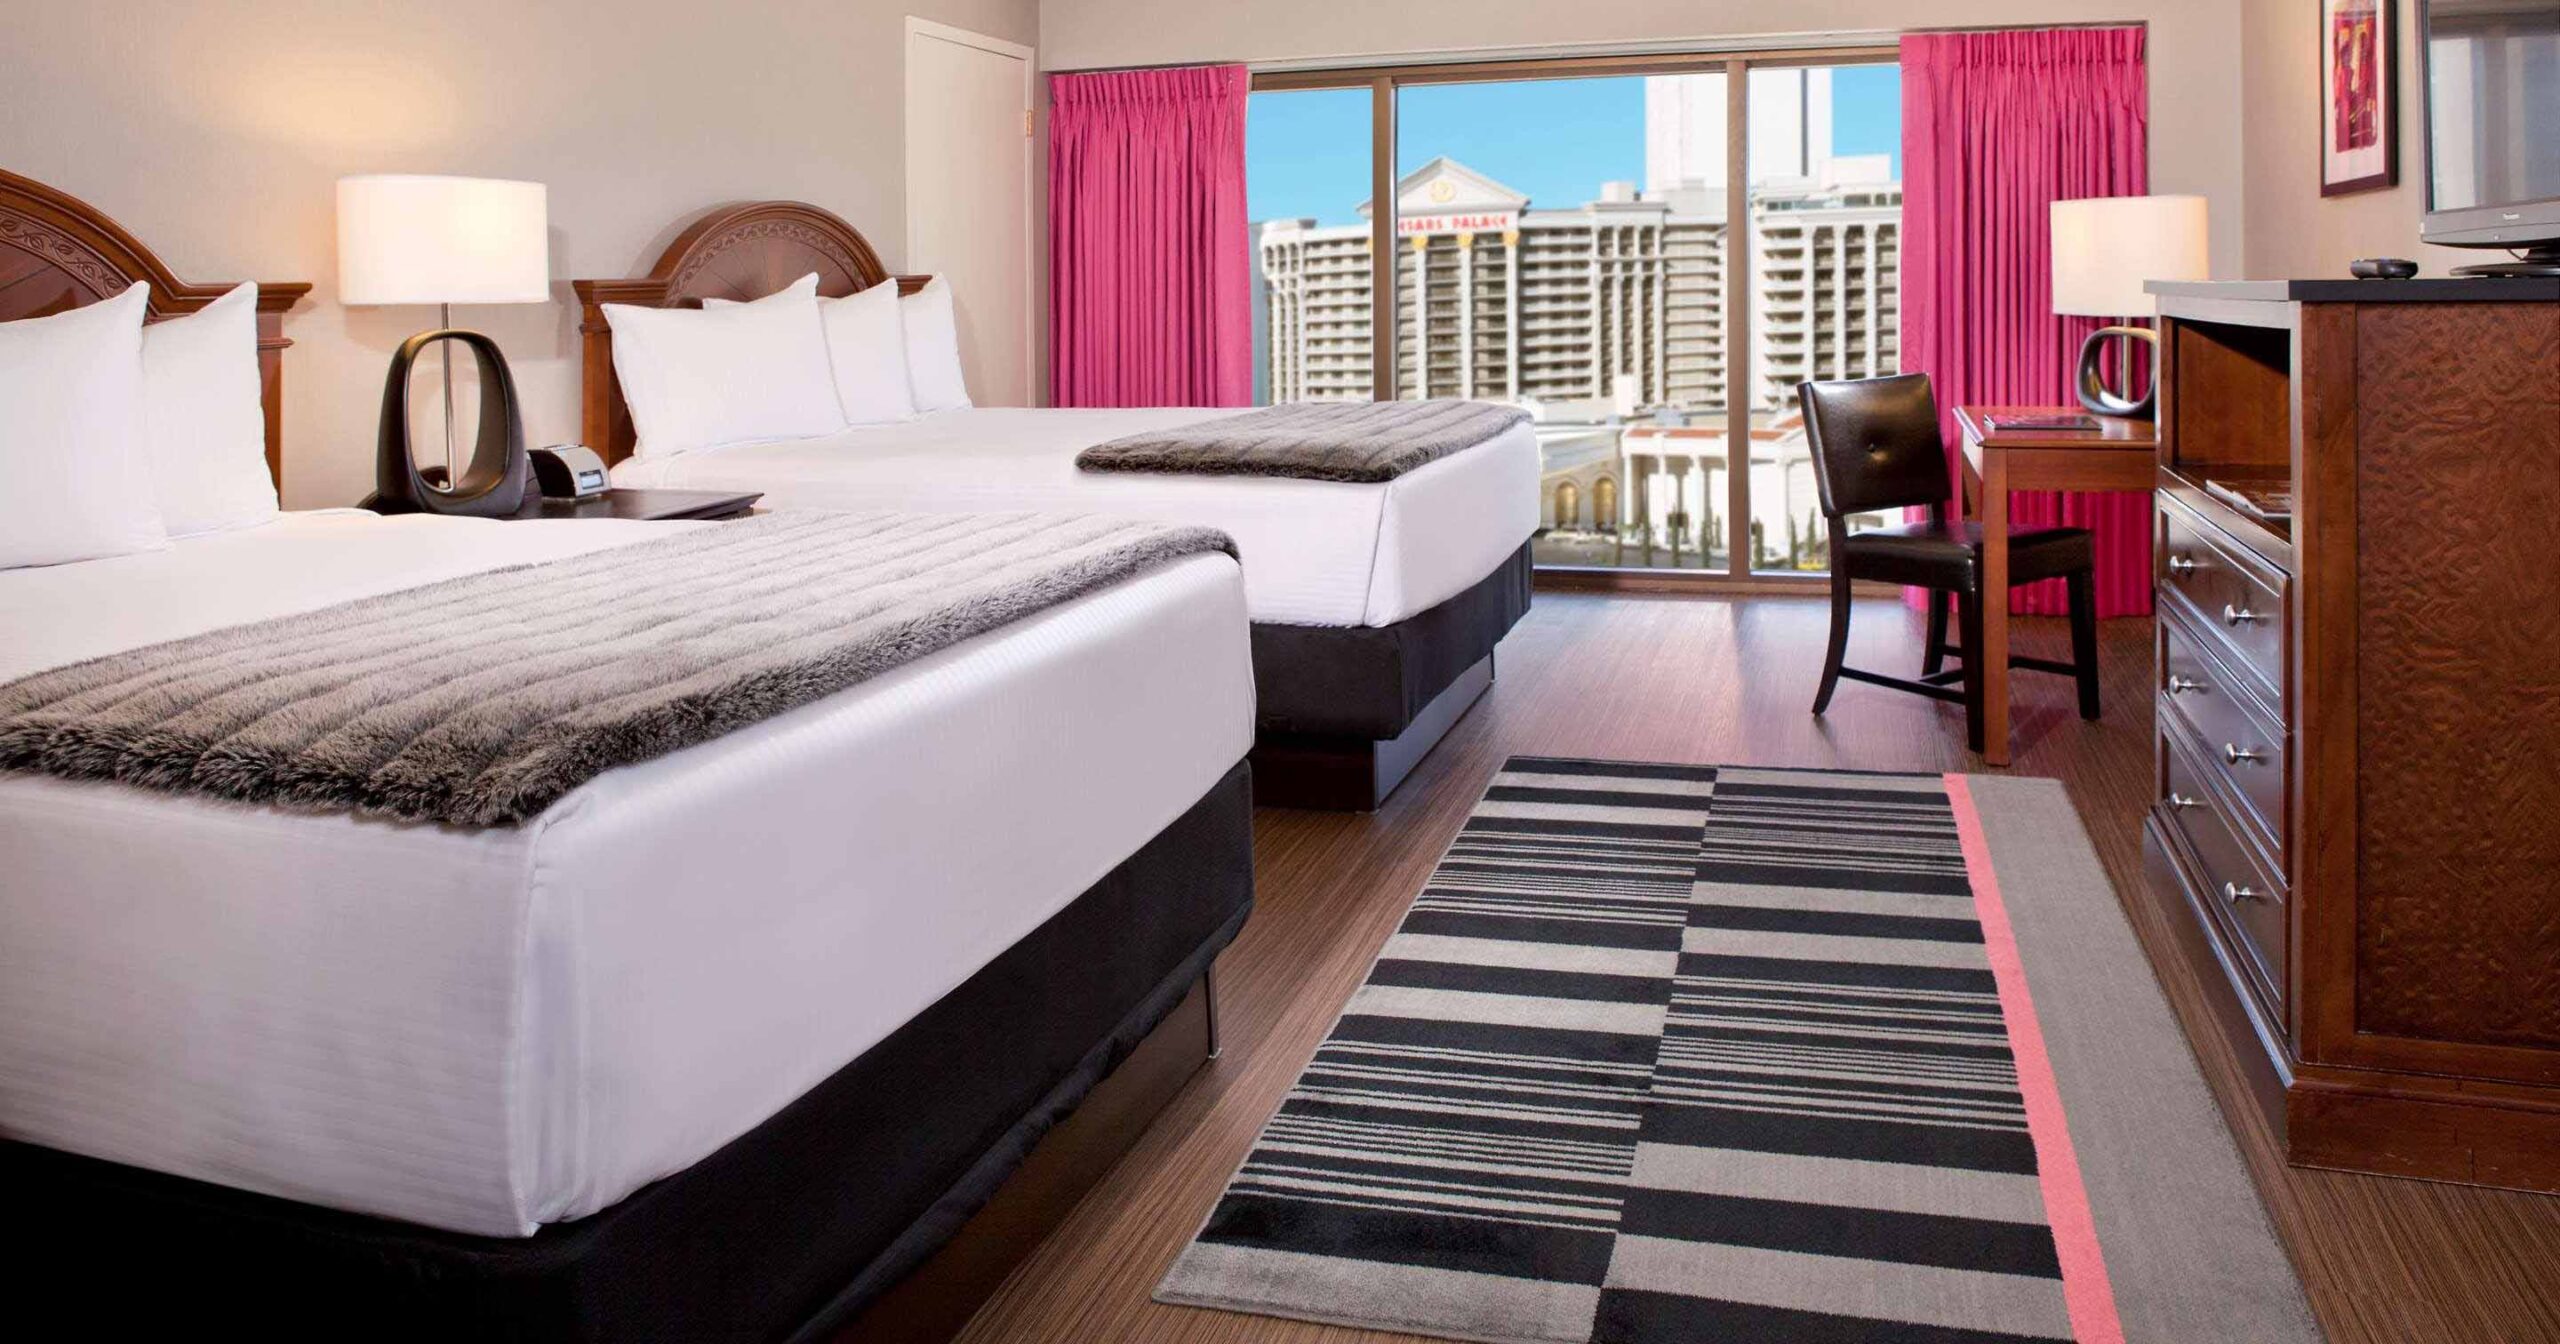 Flamingo room Las Vegas hotels